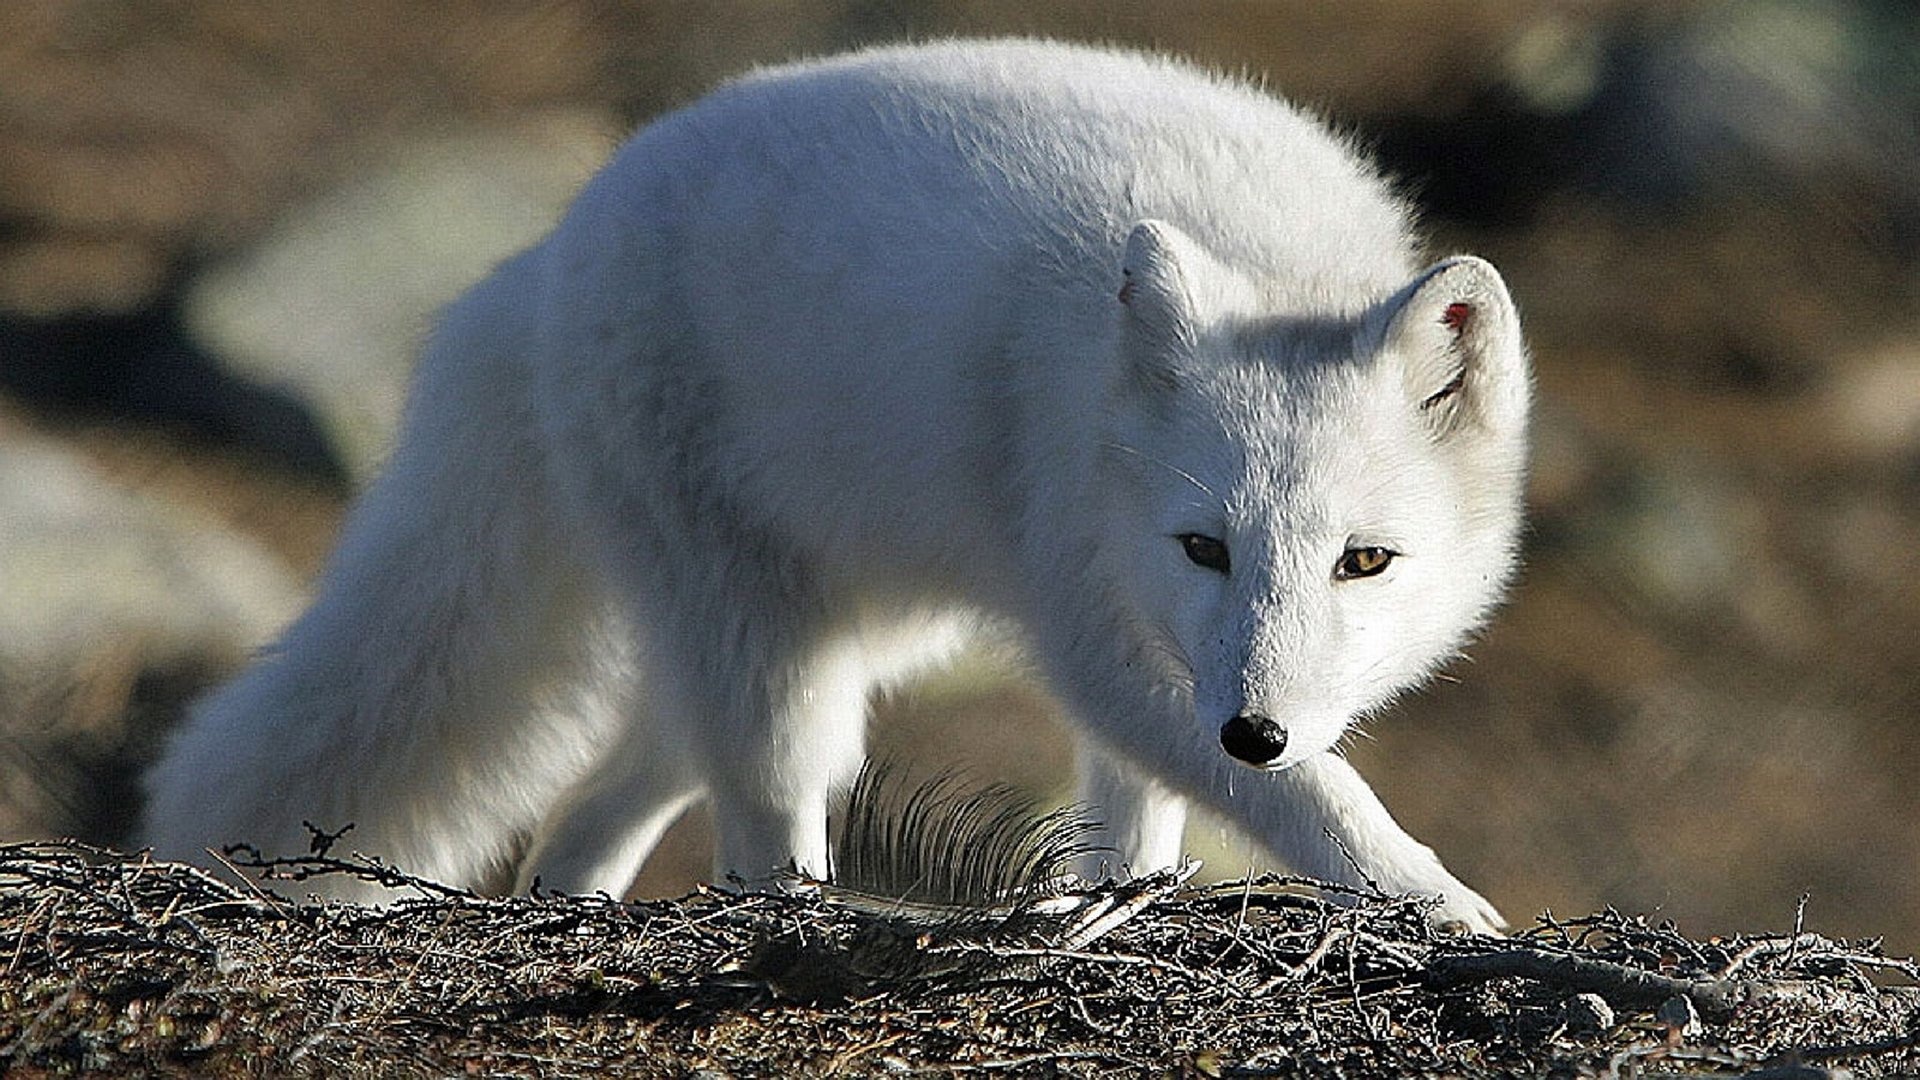 Arctic fox portrait, Snowy white fur, Icy backdrop, Winter wonderland, 1920x1080 Full HD Desktop